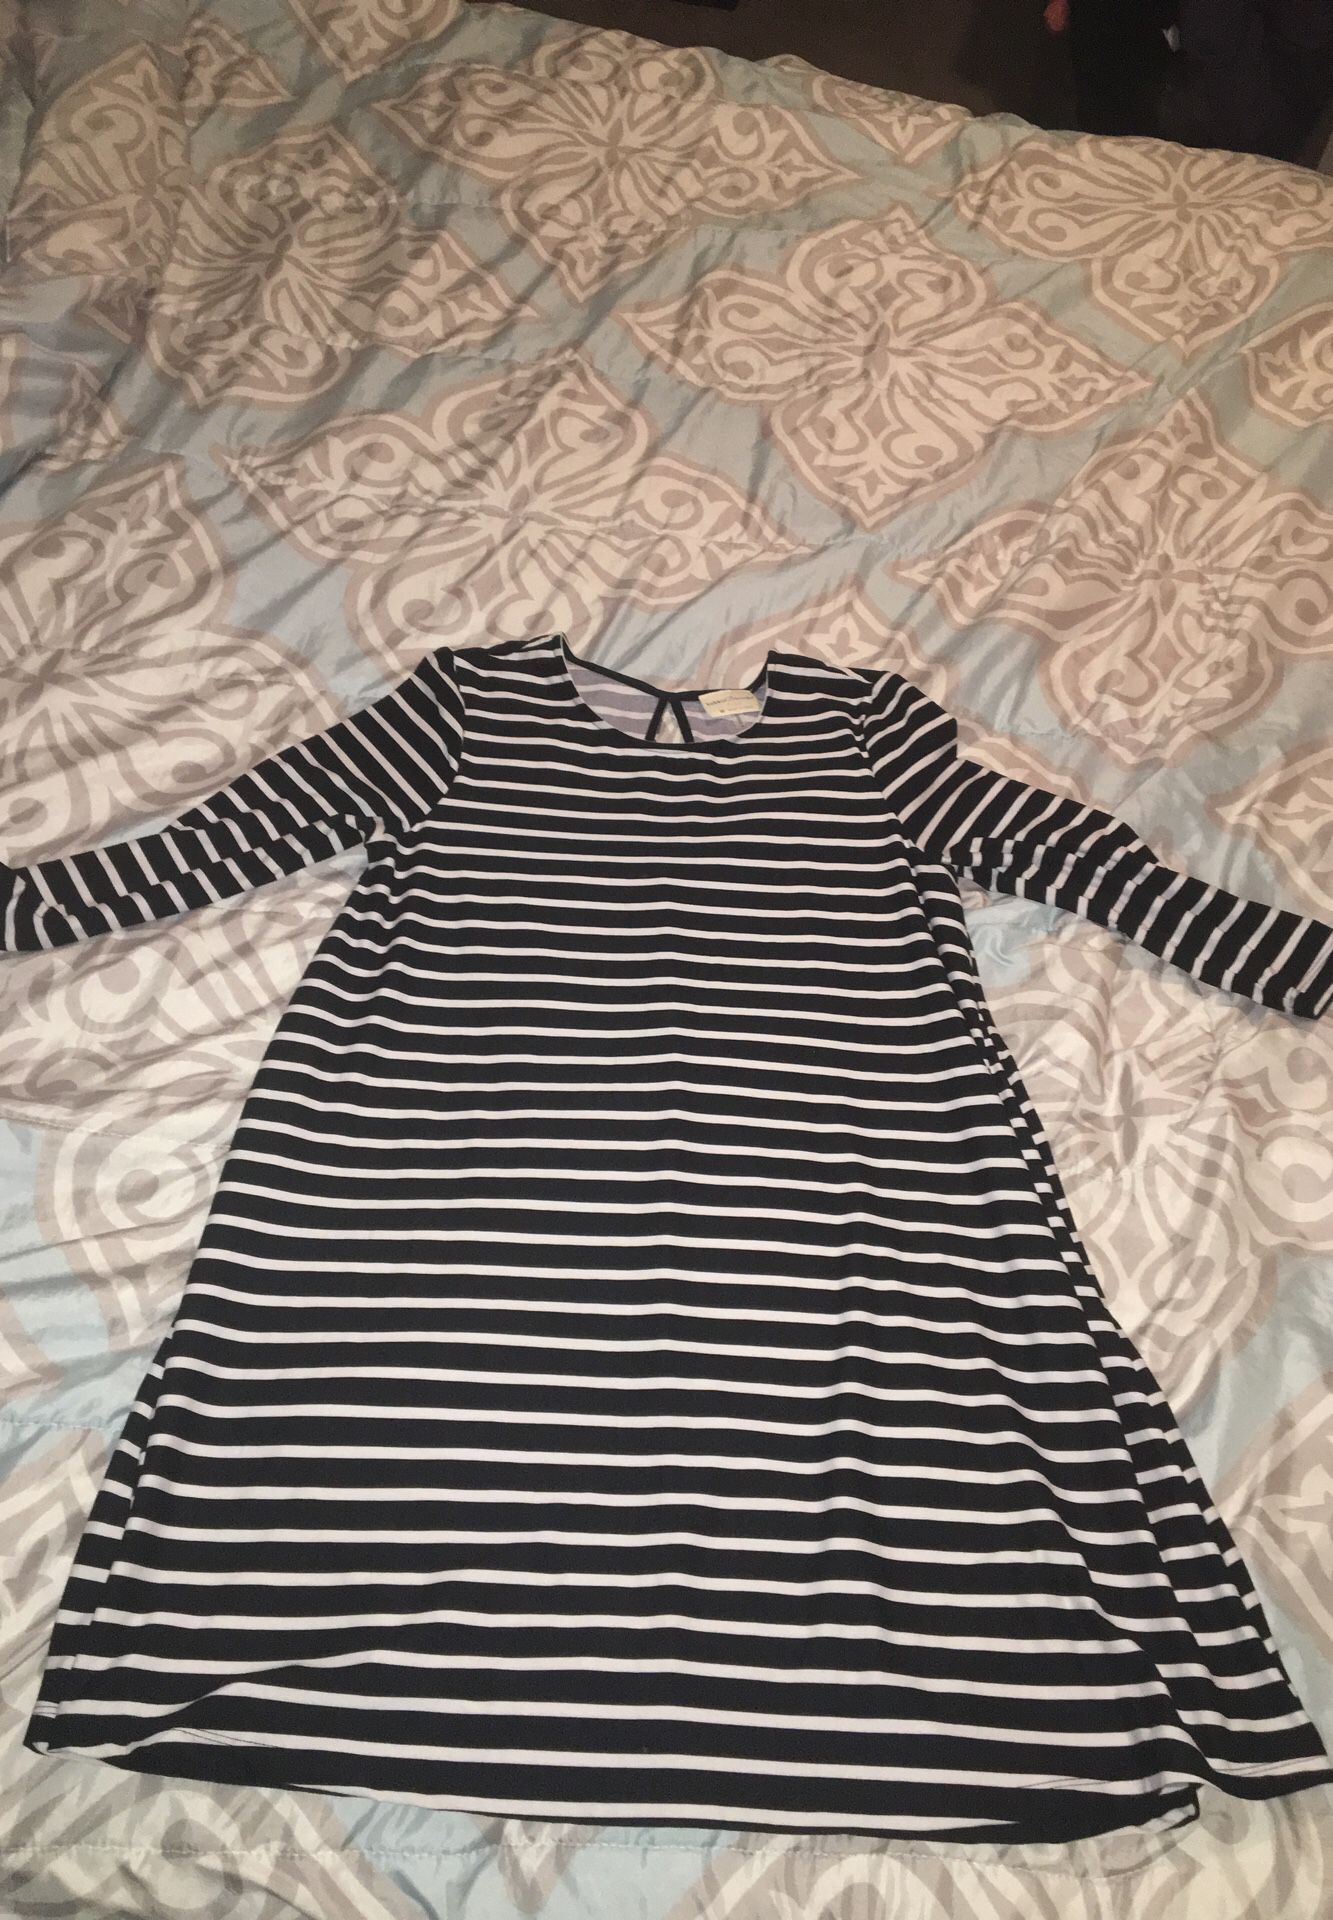 Dress 3$ size medium